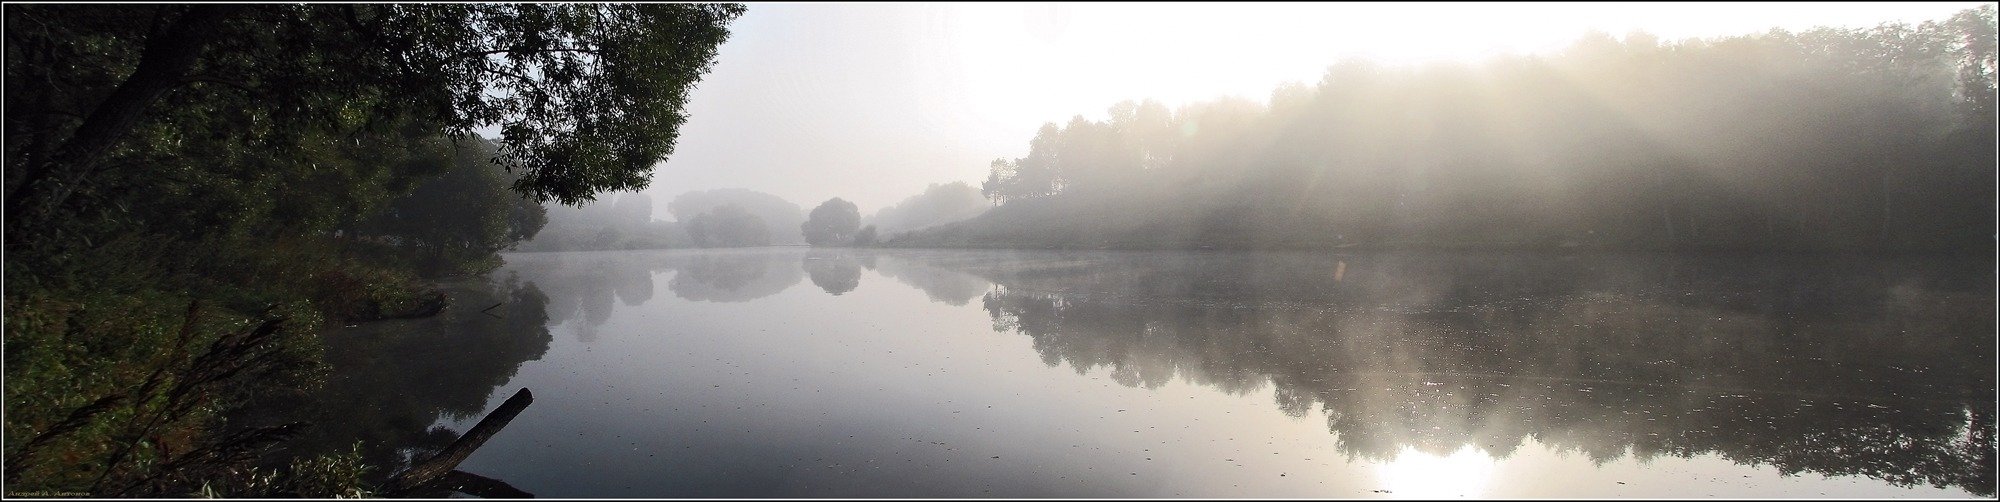 озеро, туман, рыбалка, Андрей Антонов